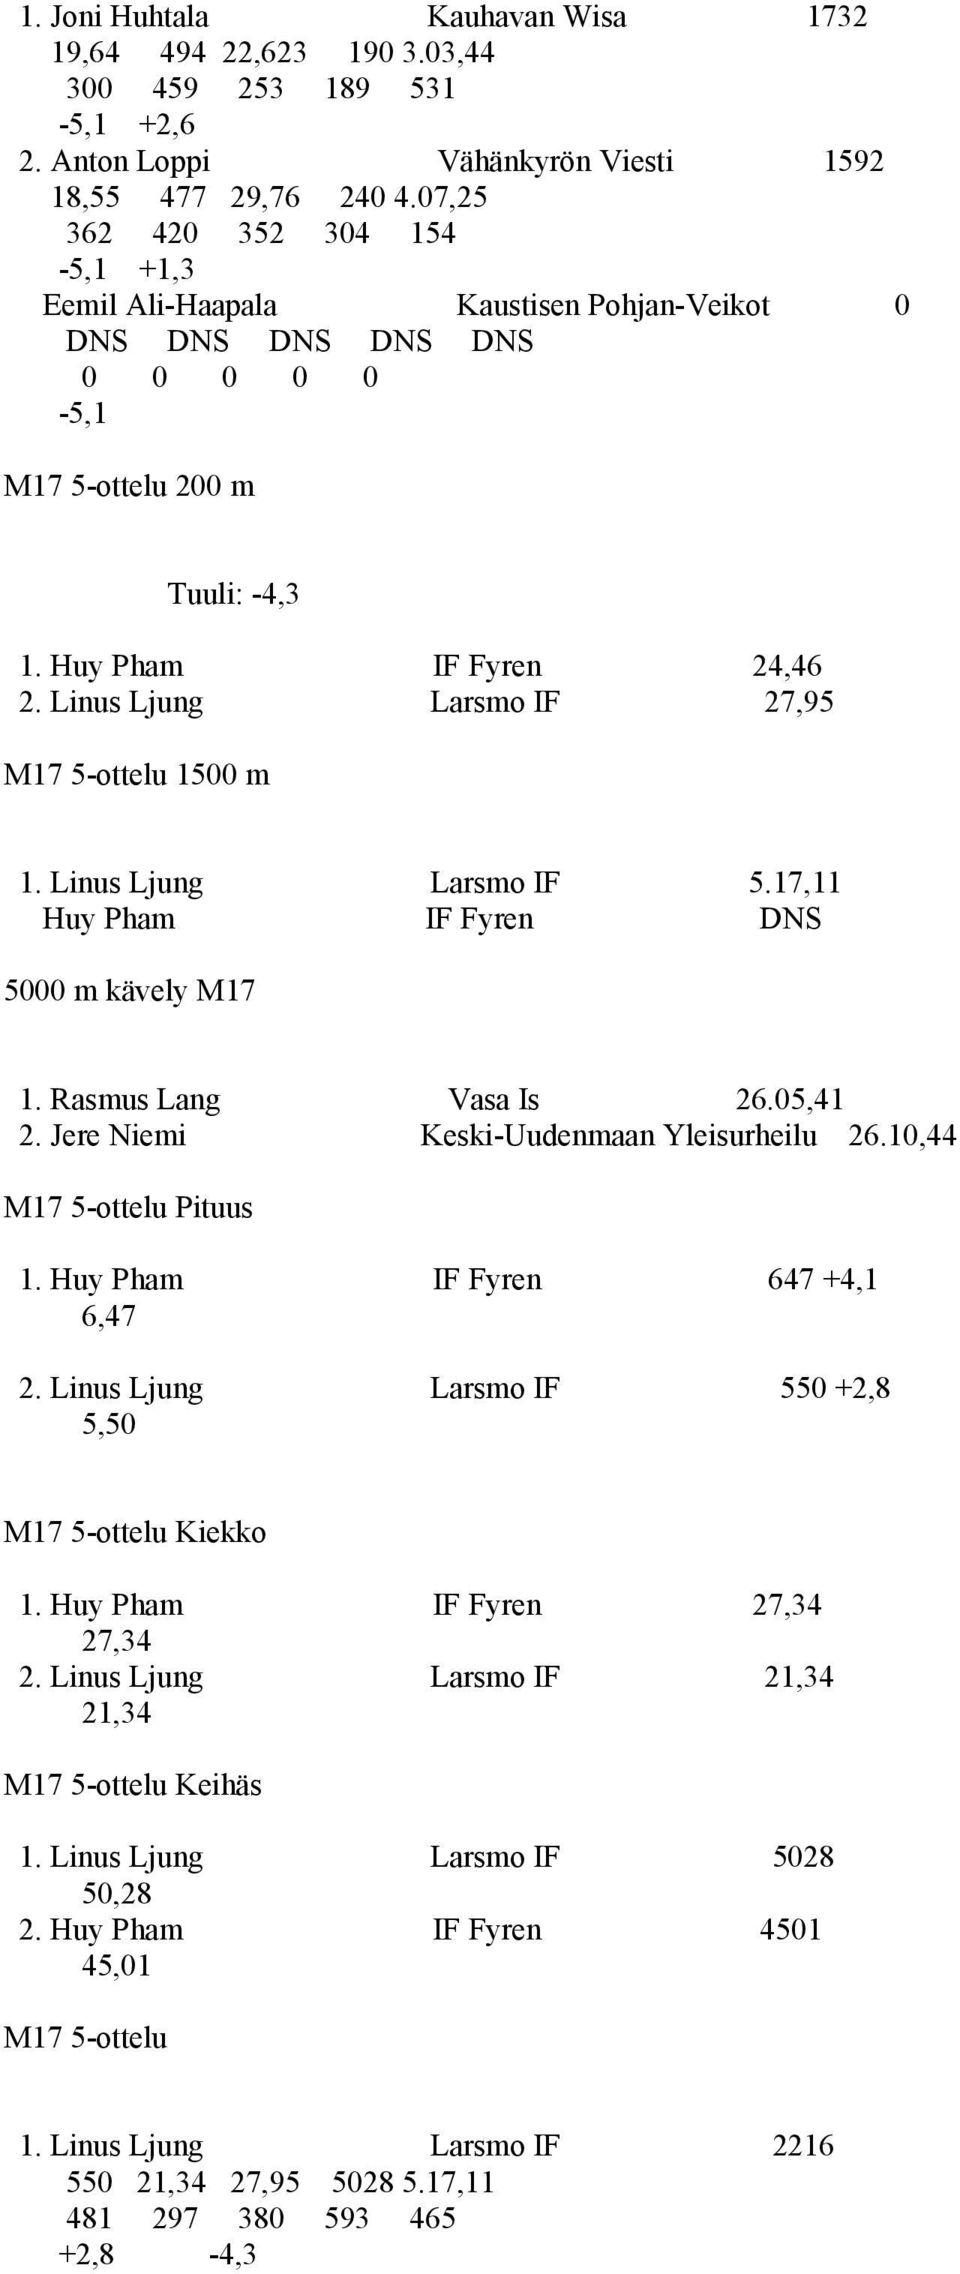 Linus Ljung Larsmo IF 27,95 M17 5-ottelu 1500 m 1. Linus Ljung Larsmo IF 5.17,11 Huy Pham IF Fyren DNS 5000 m kävely M17 1. Rasmus Lang Vasa Is 26.05,41 2. Jere Niemi Keski-Uudenmaan Yleisurheilu 26.